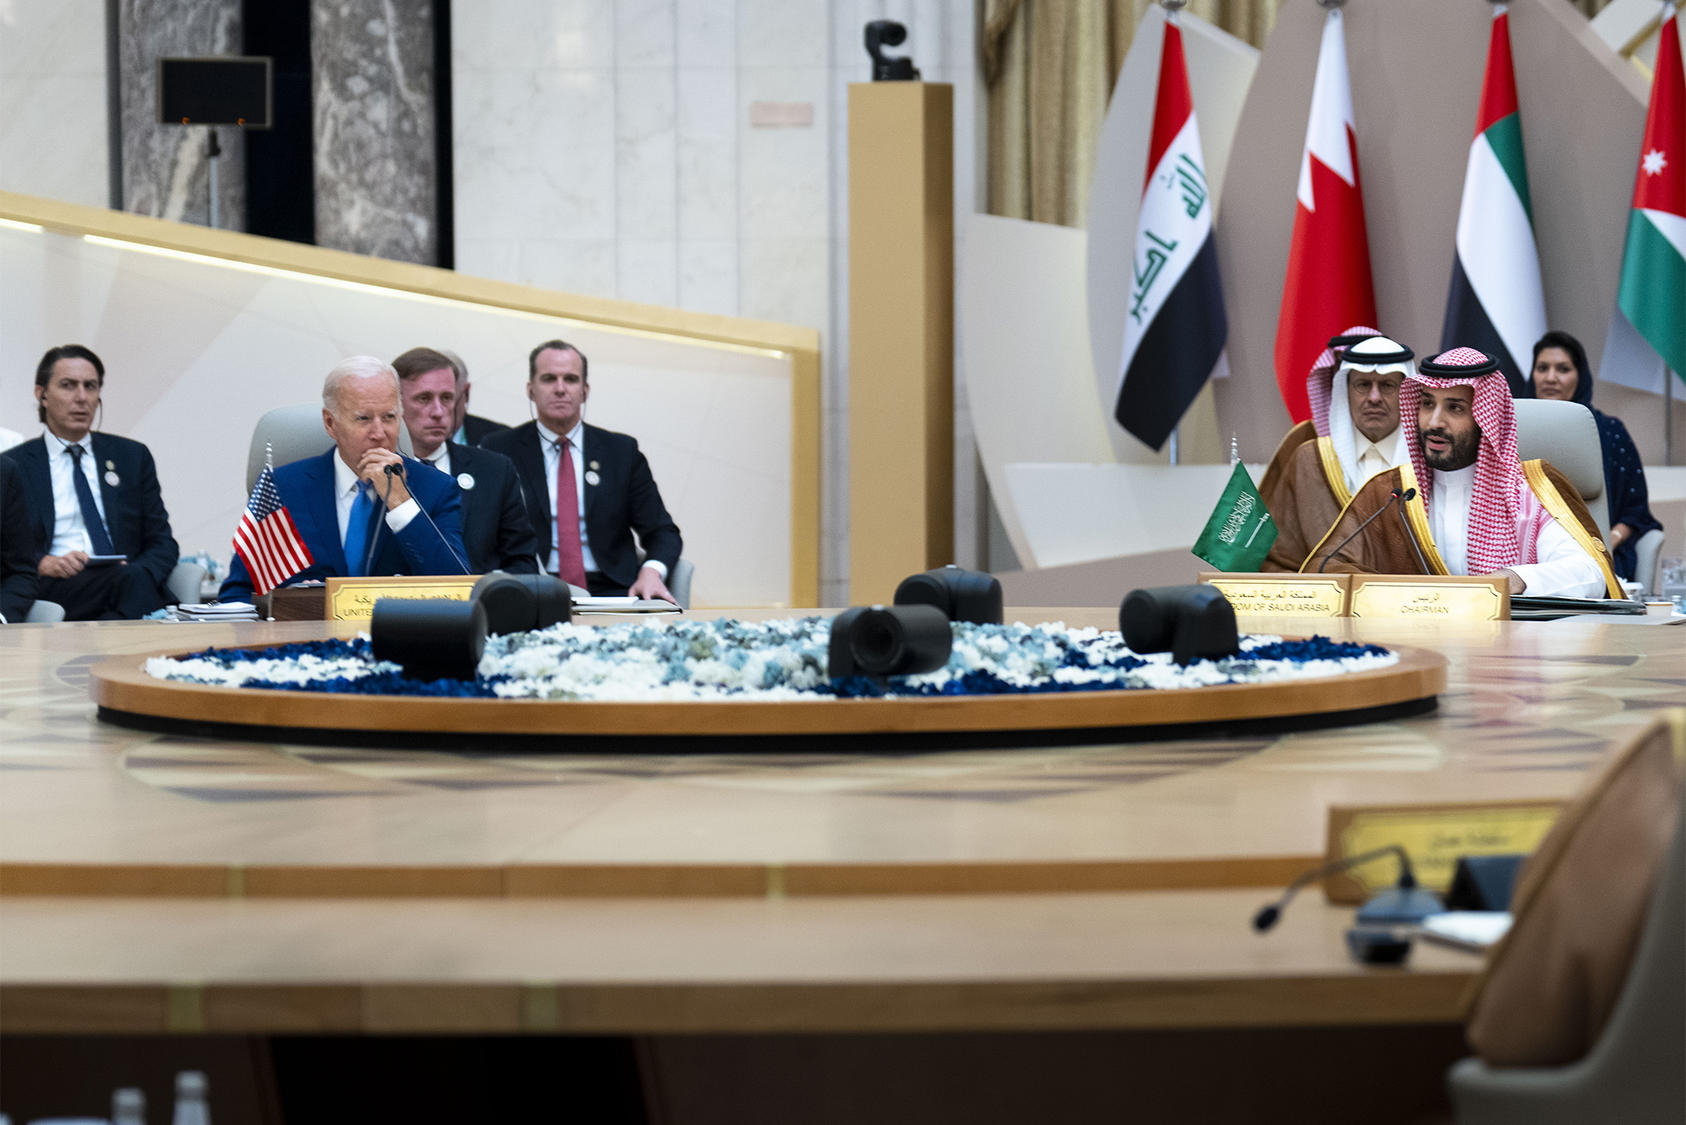 President Joe Biden and Saudi Crown Prince Mohammed bin Salman, far right, attend the Gulf Cooperation Council in Jeddah, Saudi Arabia, on Saturday, July 16, 2022. (Doug Mills/The New York Times)